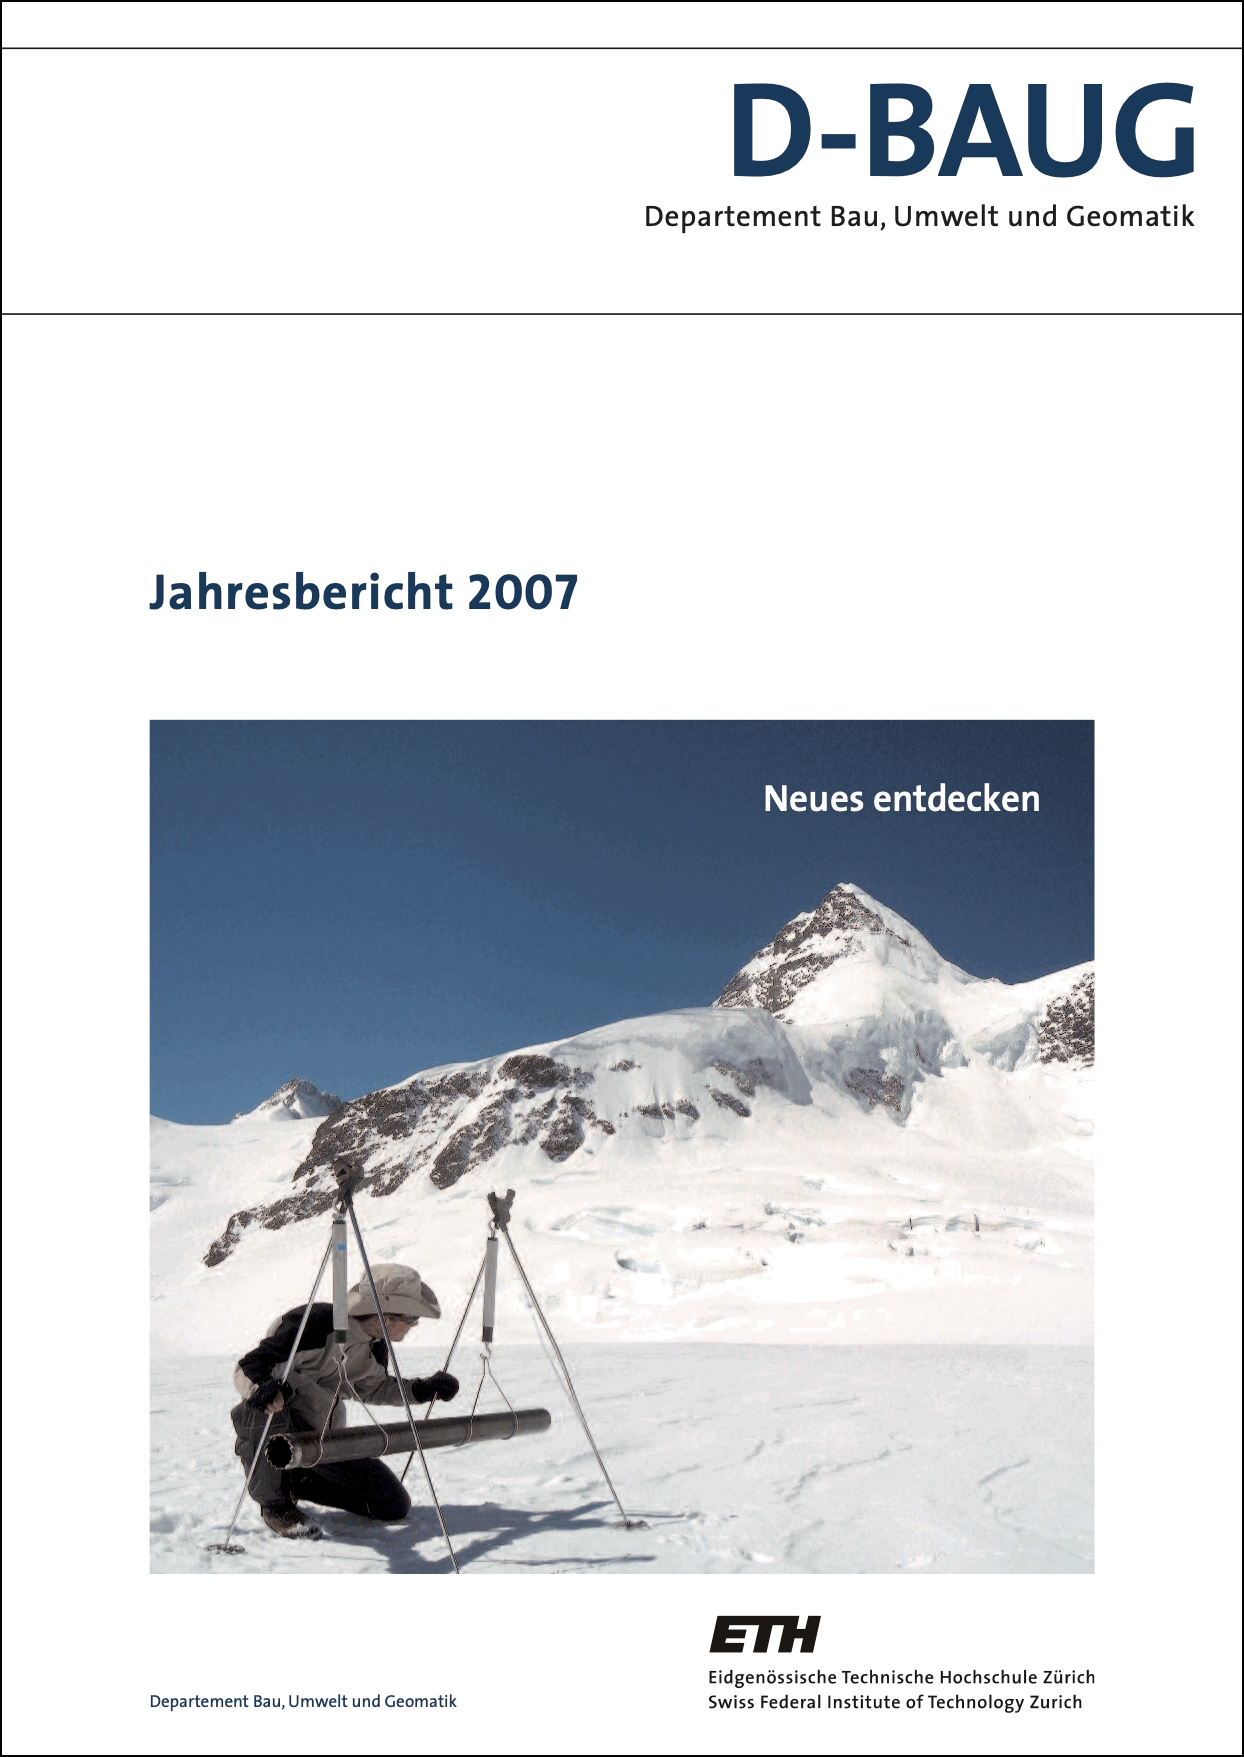 D-BAUG Annual report 2007